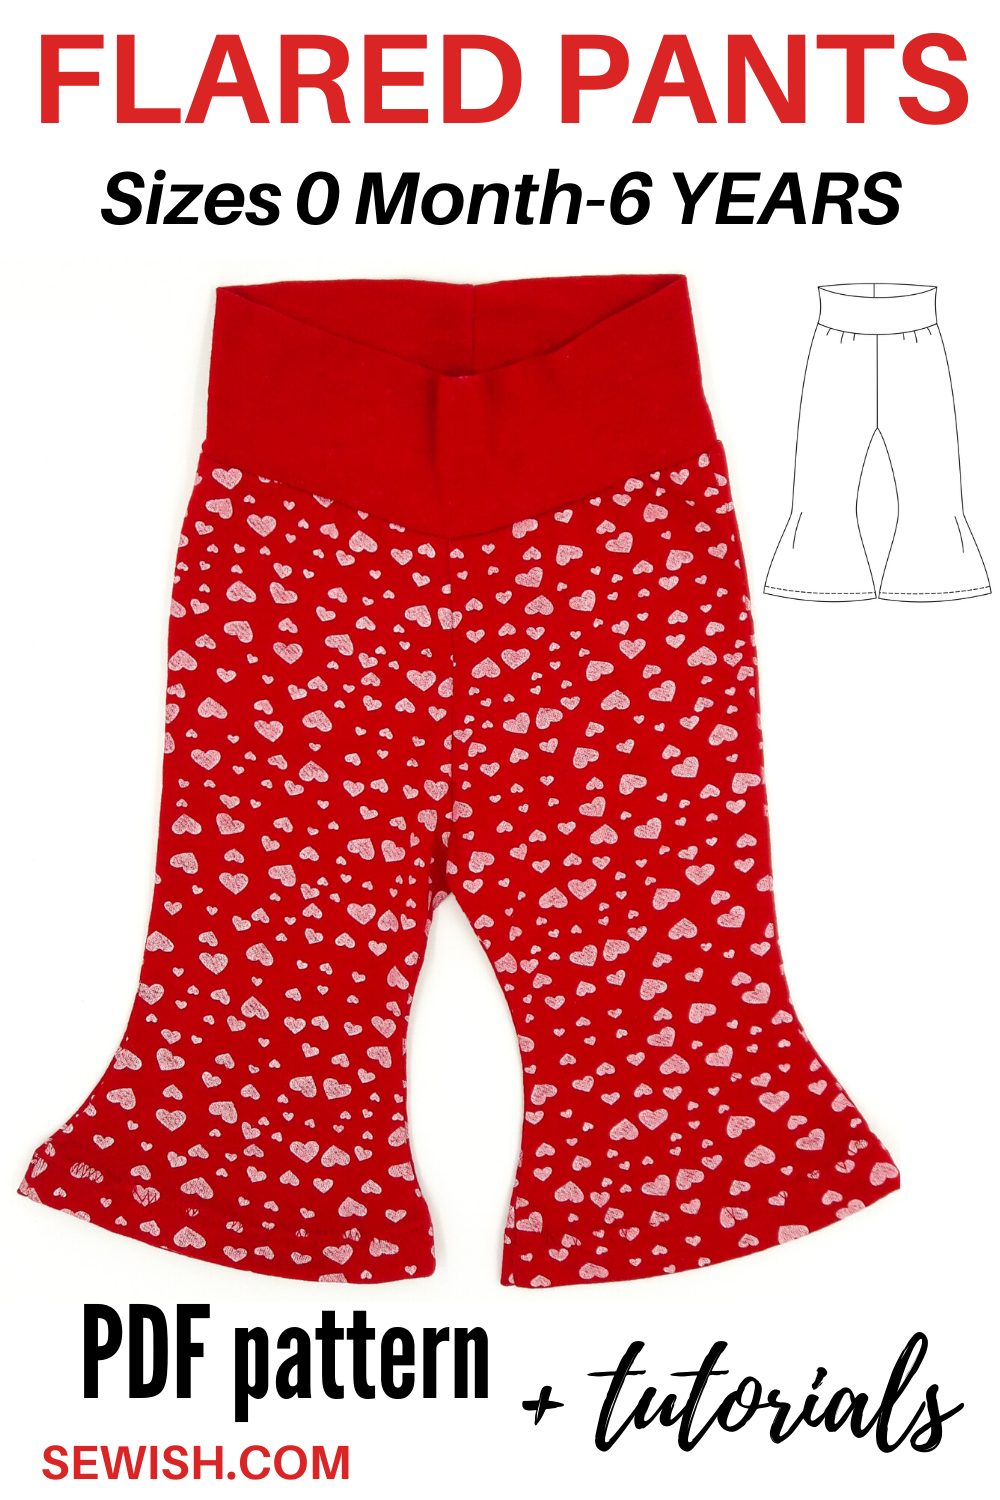 Baby Harem Pants sewing pattern (1-24 months) - Sew Modern Kids